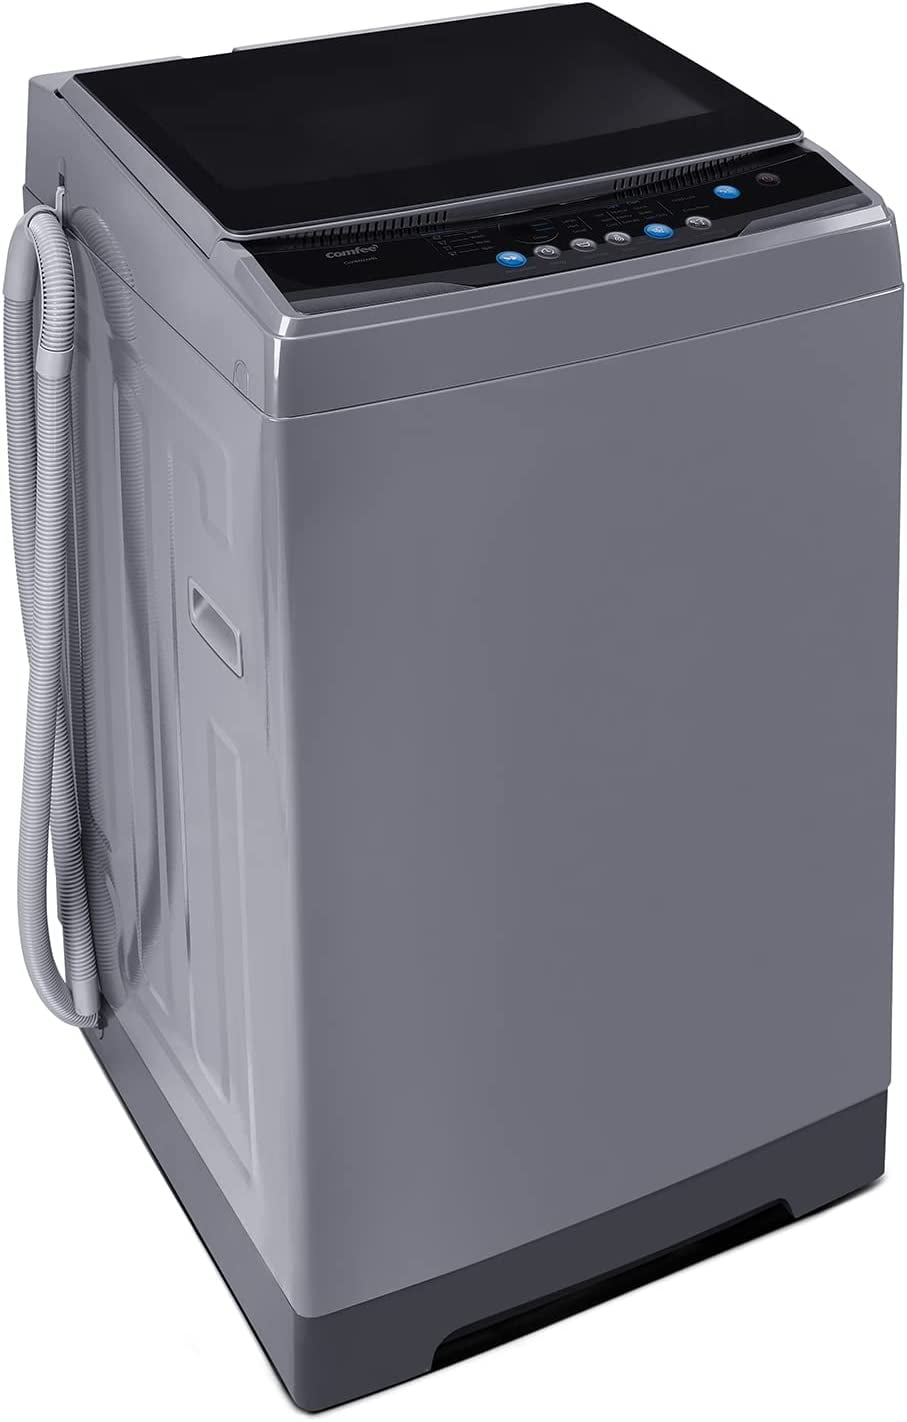 COMFEE' Portable Washing Machine 2.4 Cu.ft LED/ COMFEE' Lavadora